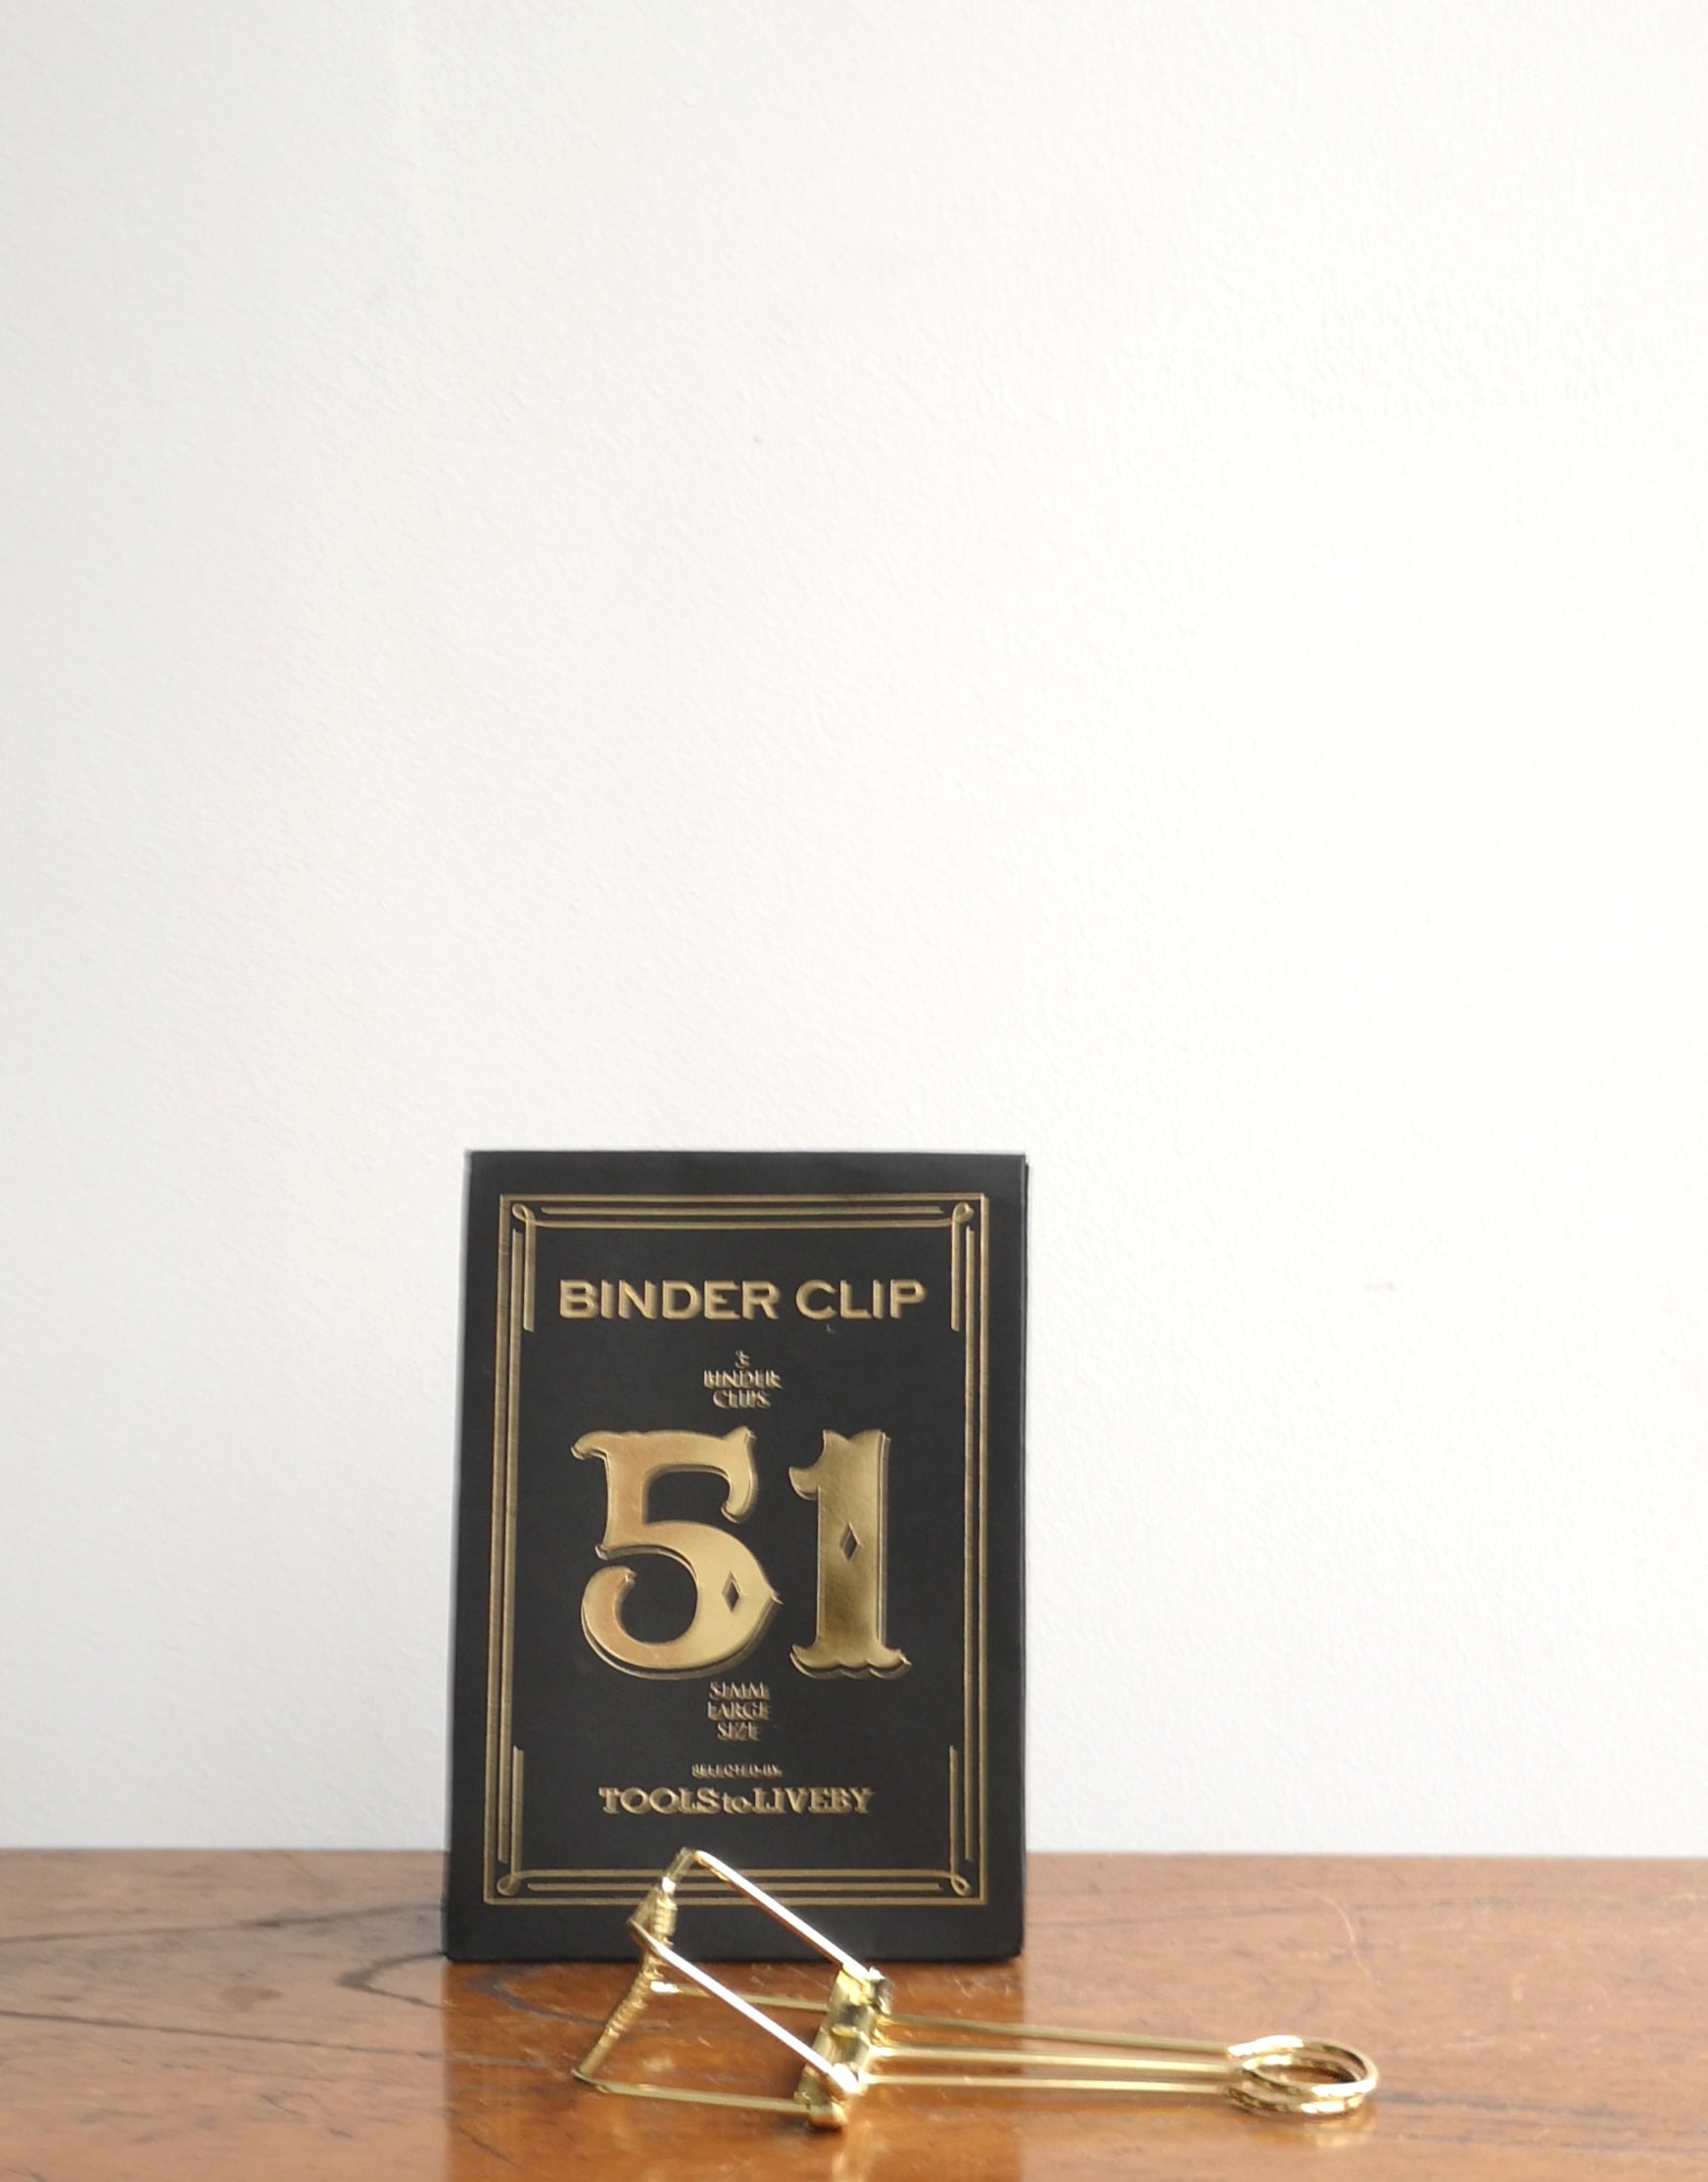 Binder clips – Wickle